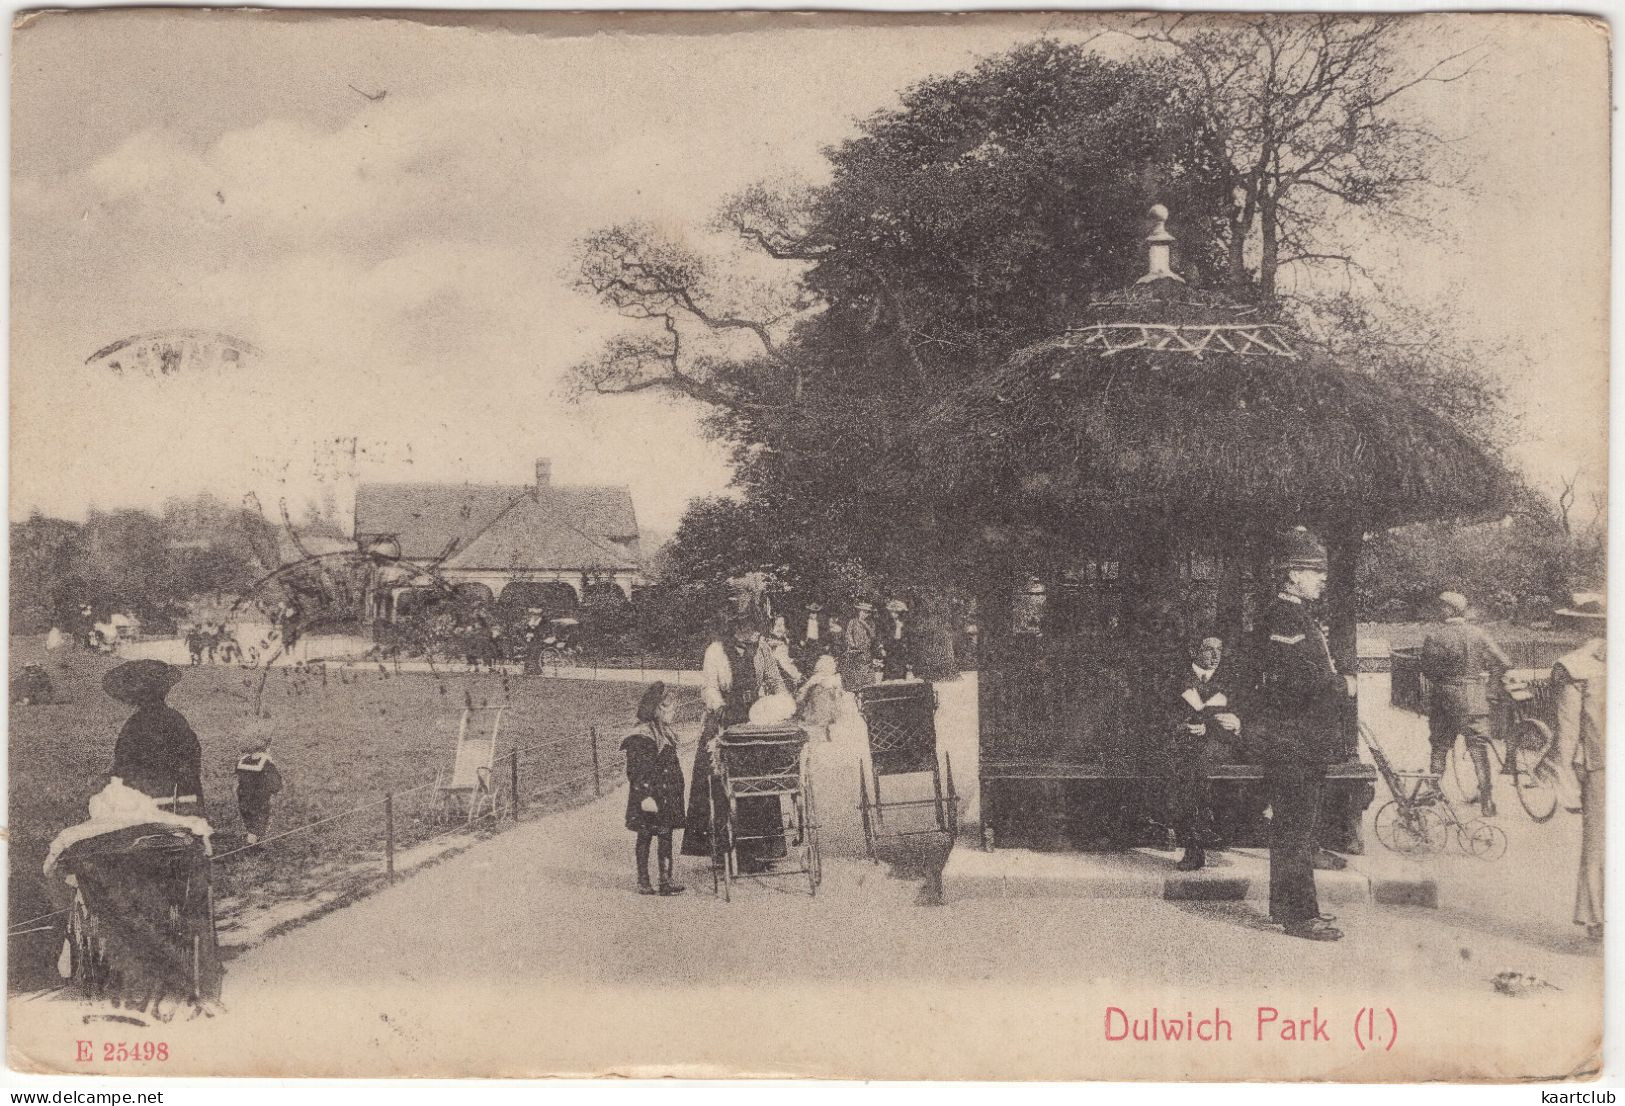 Dulwich Park (l.).  - (England, U.K.) - 1906 - Pram, Policeman - (Stengel & Co. - E 25498) - London Suburbs